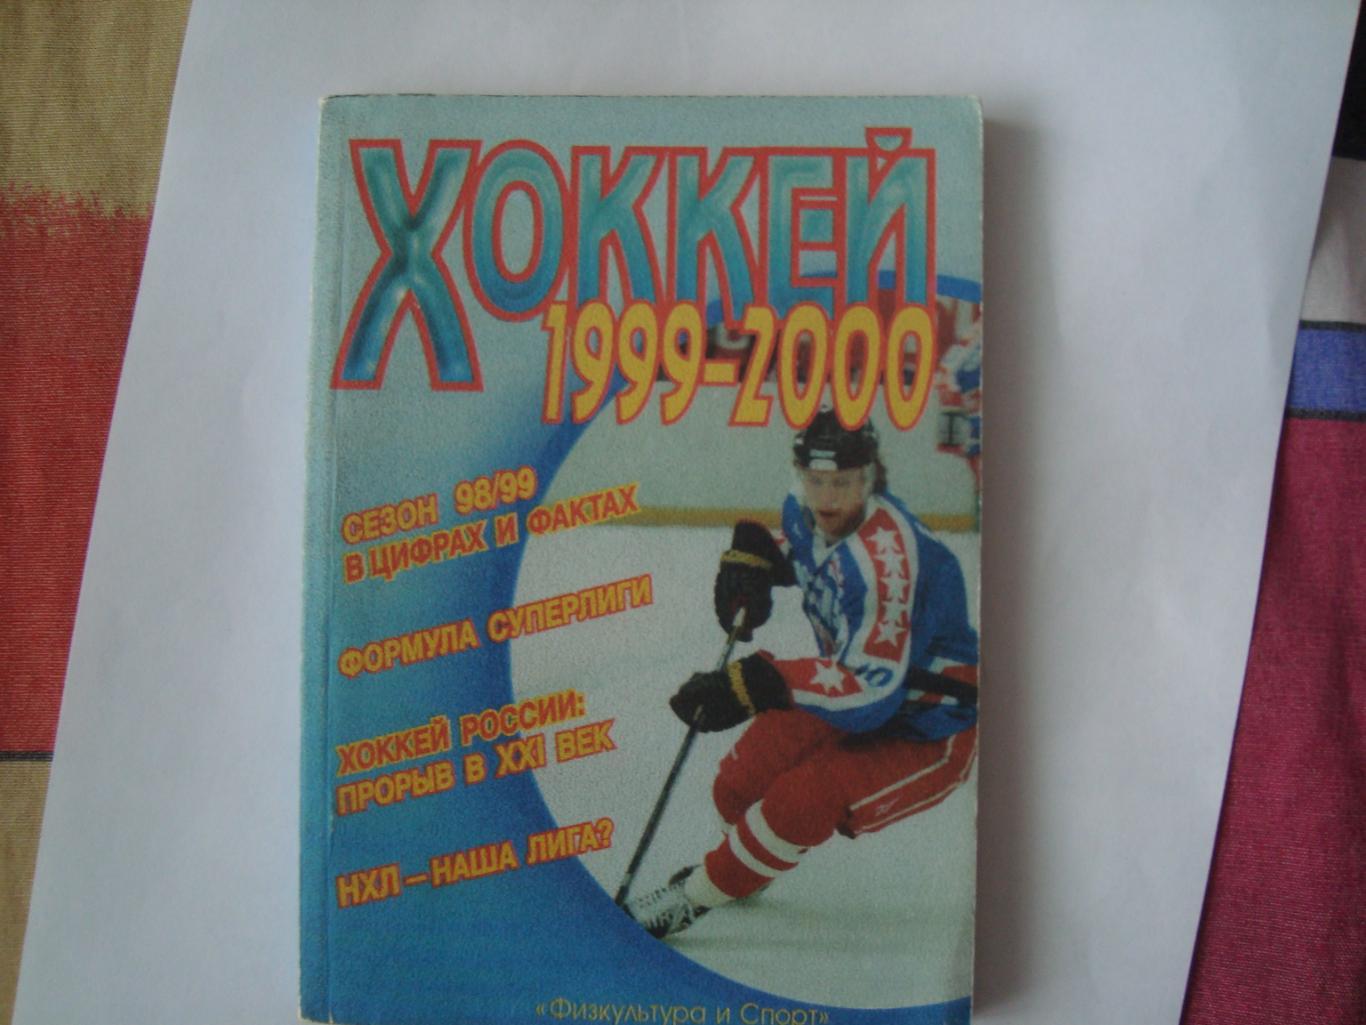 Москва. 1999/2000. Хоккей. ФИС.